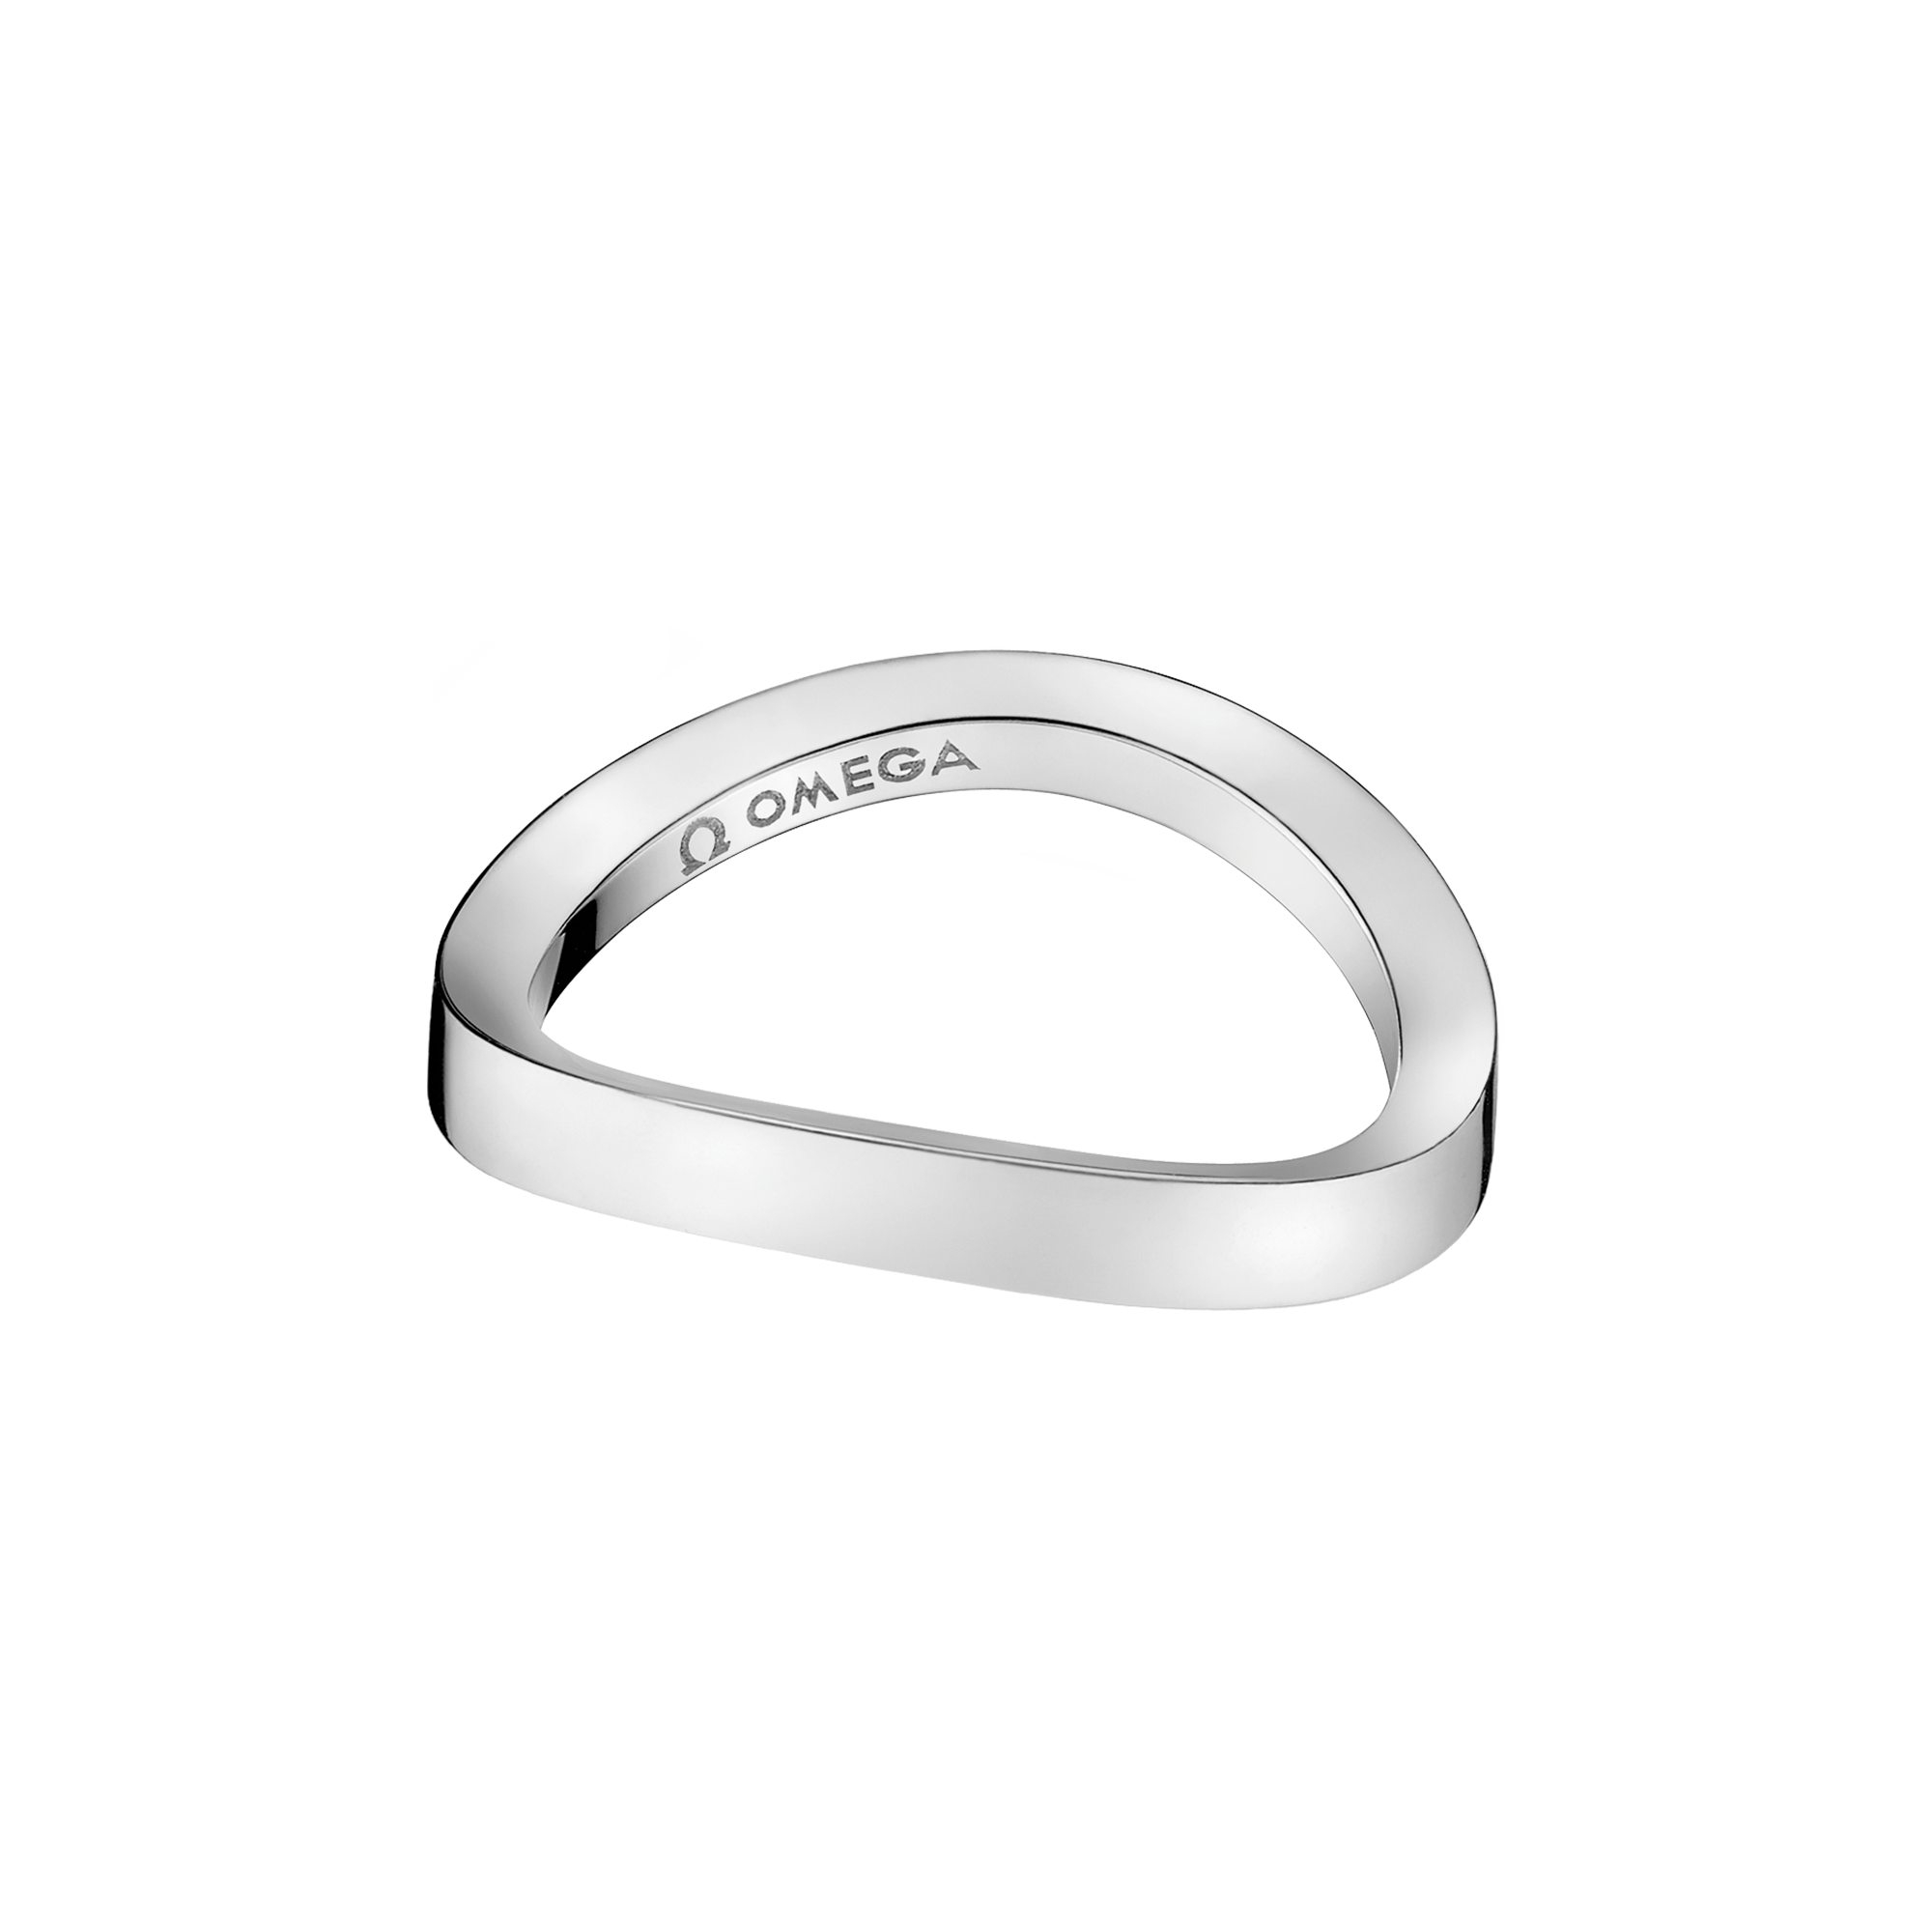 Aqua Swing Ring, 18K white gold - R42BCA05001XX